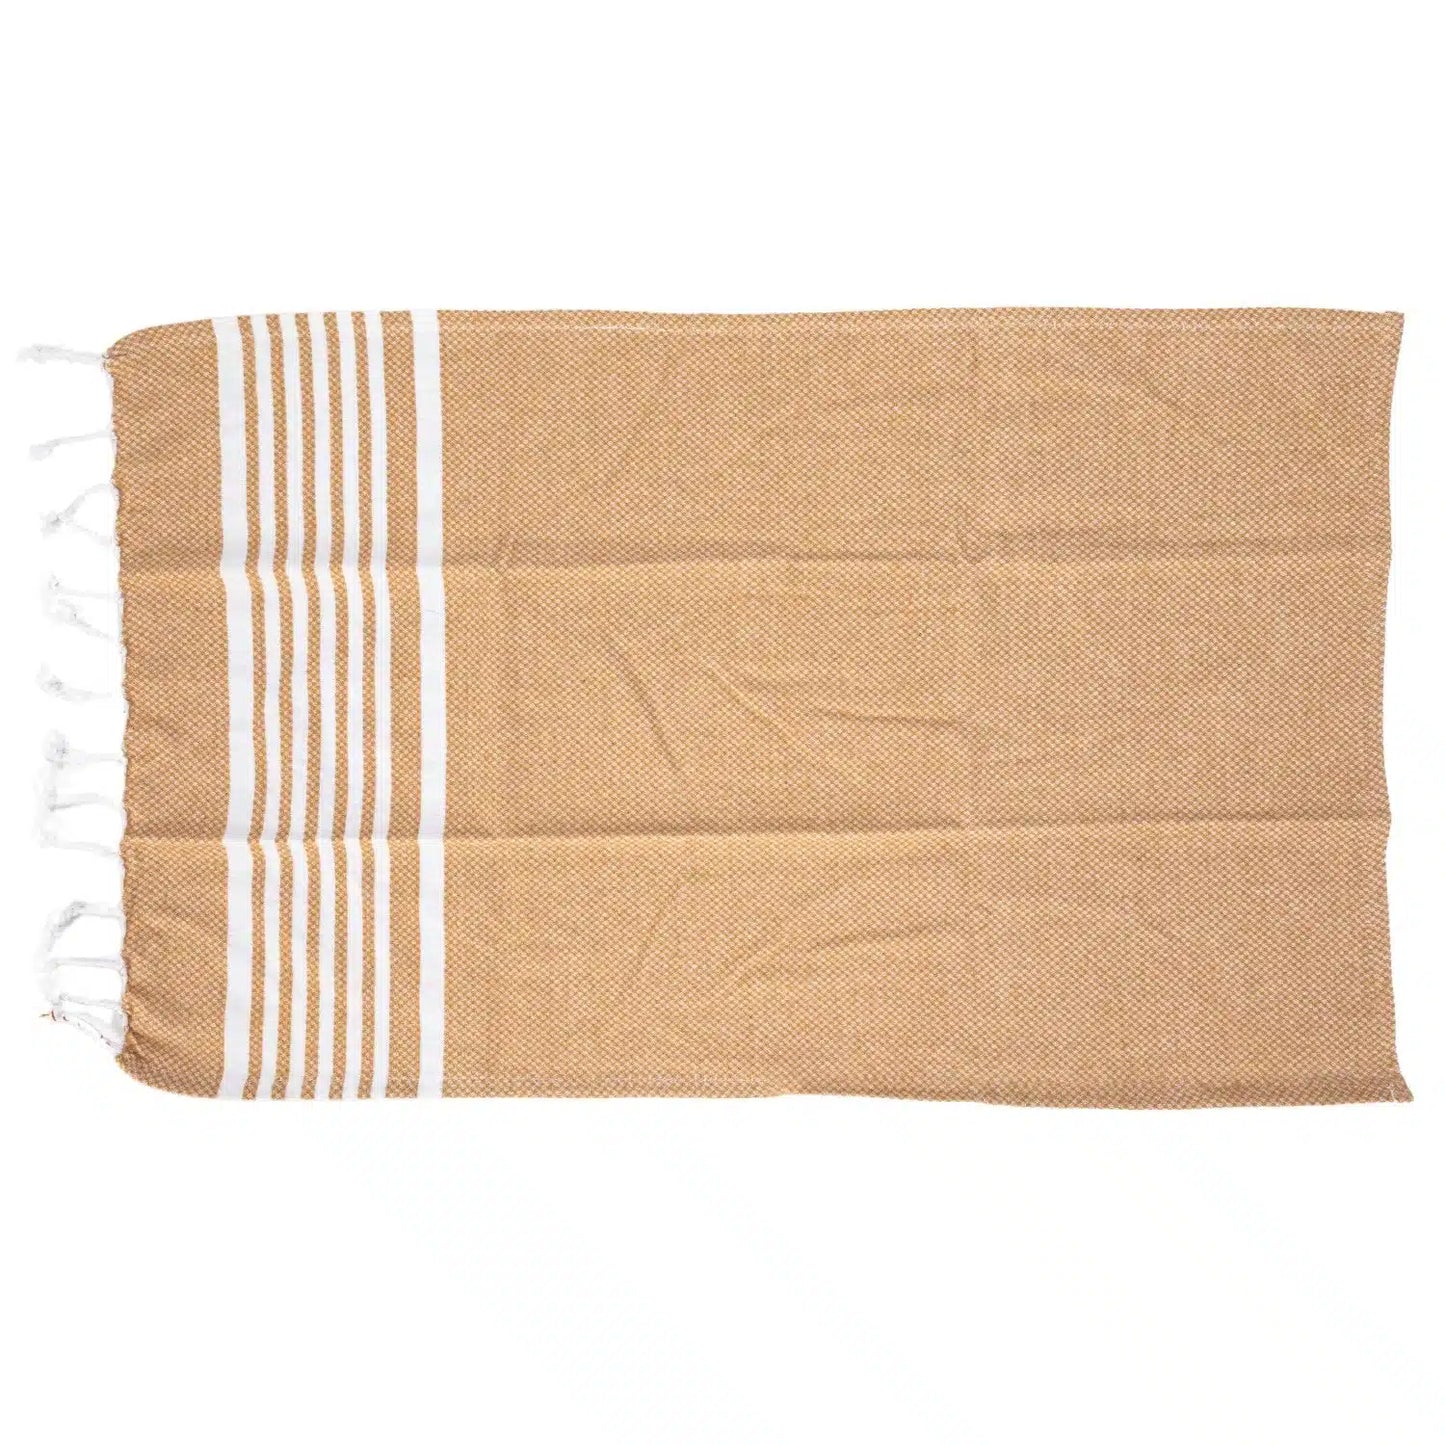 Woven Cotton Yarn Dyed Kitchen Towel w/ Stripes & Tassels, 3 Styles